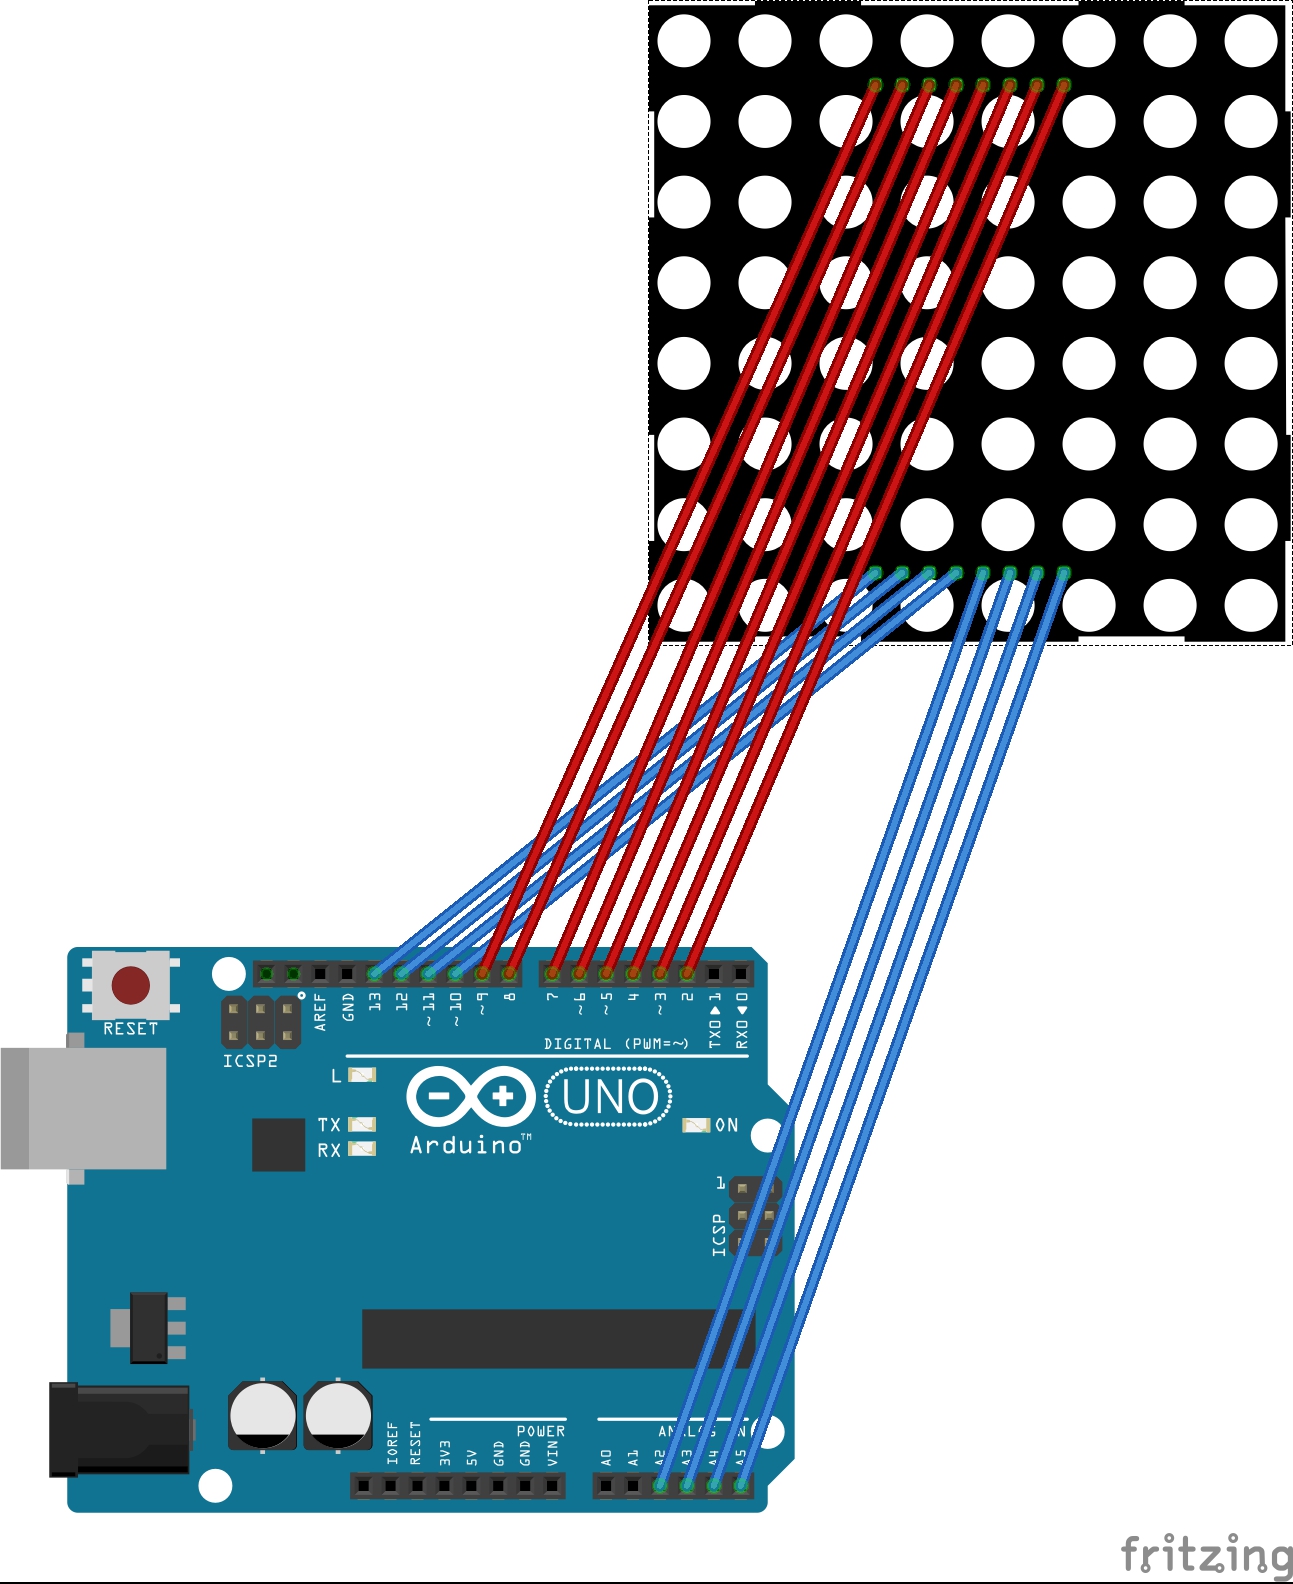 ufravigelige Margaret Mitchell konstruktion YOUR OWN SHAPE - 8x8 LED Matrix Arduino - Hackster.io